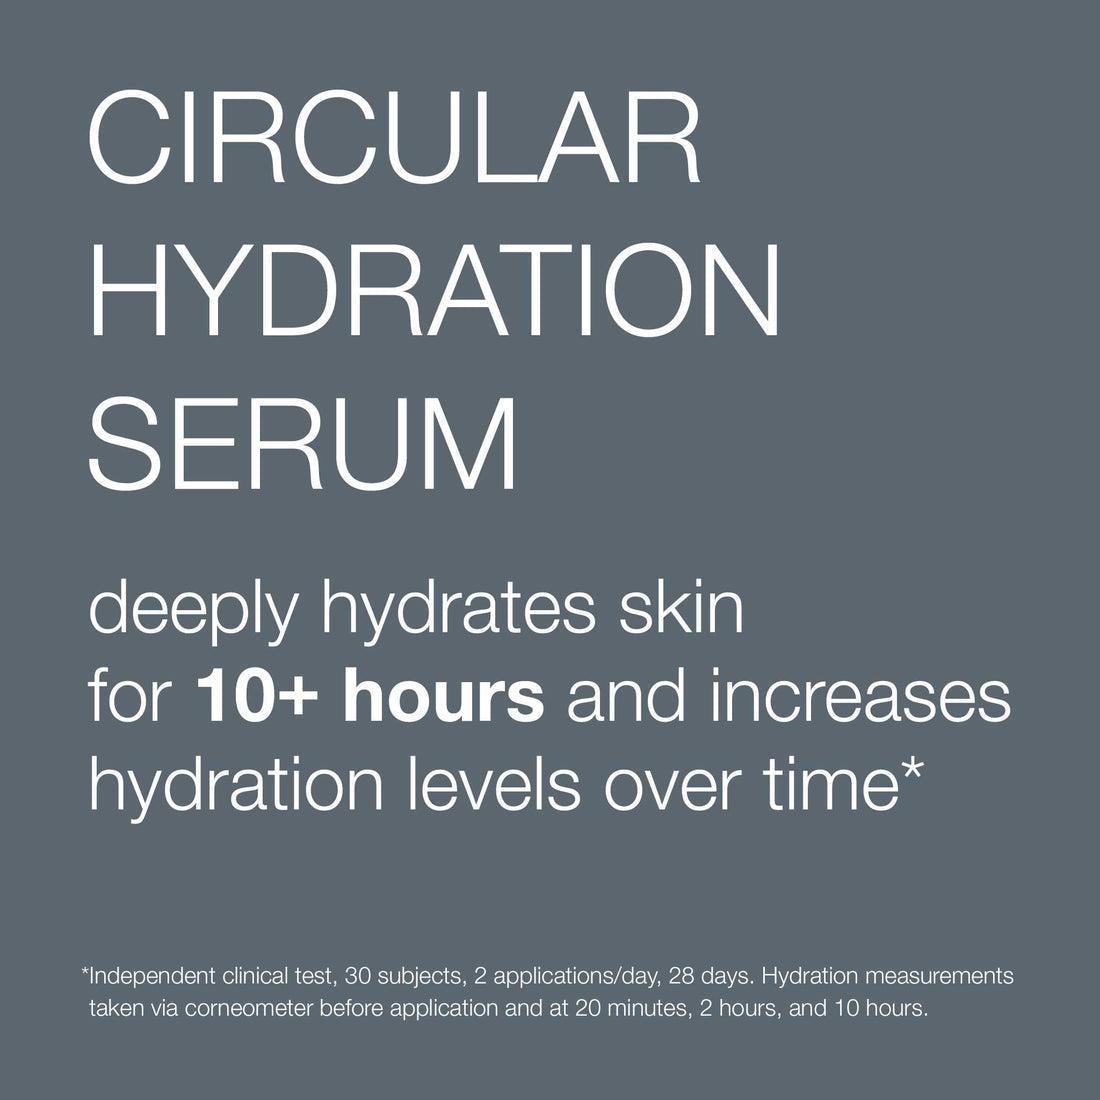 circular hydration serum 3ml (free gift with $1,500 spending) - Dermalogica Hong Kong